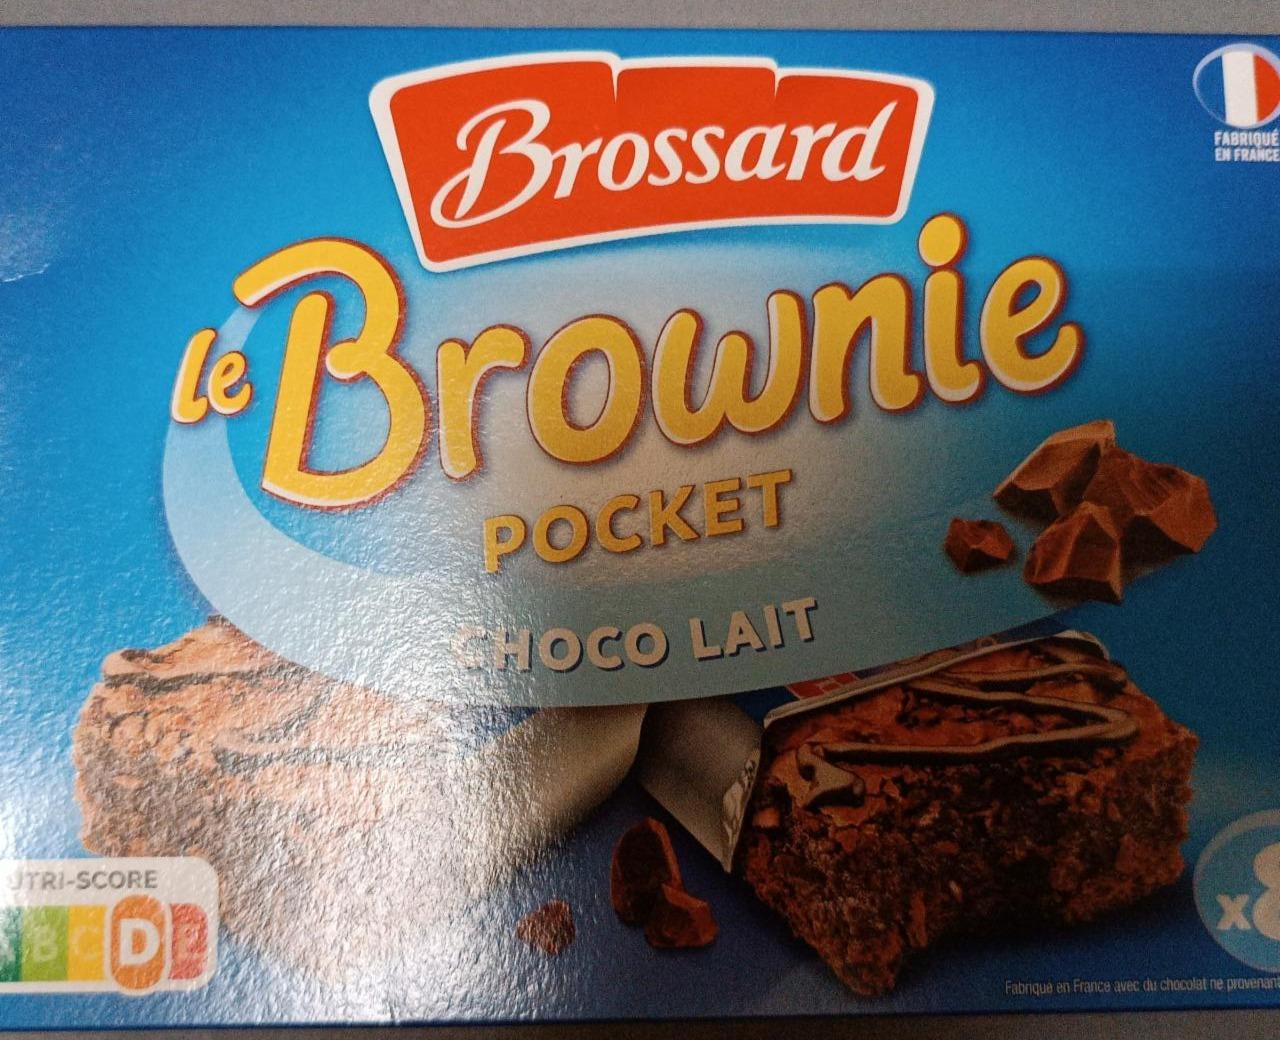 Fotografie - Le Brownie pocket choco lait Brossard